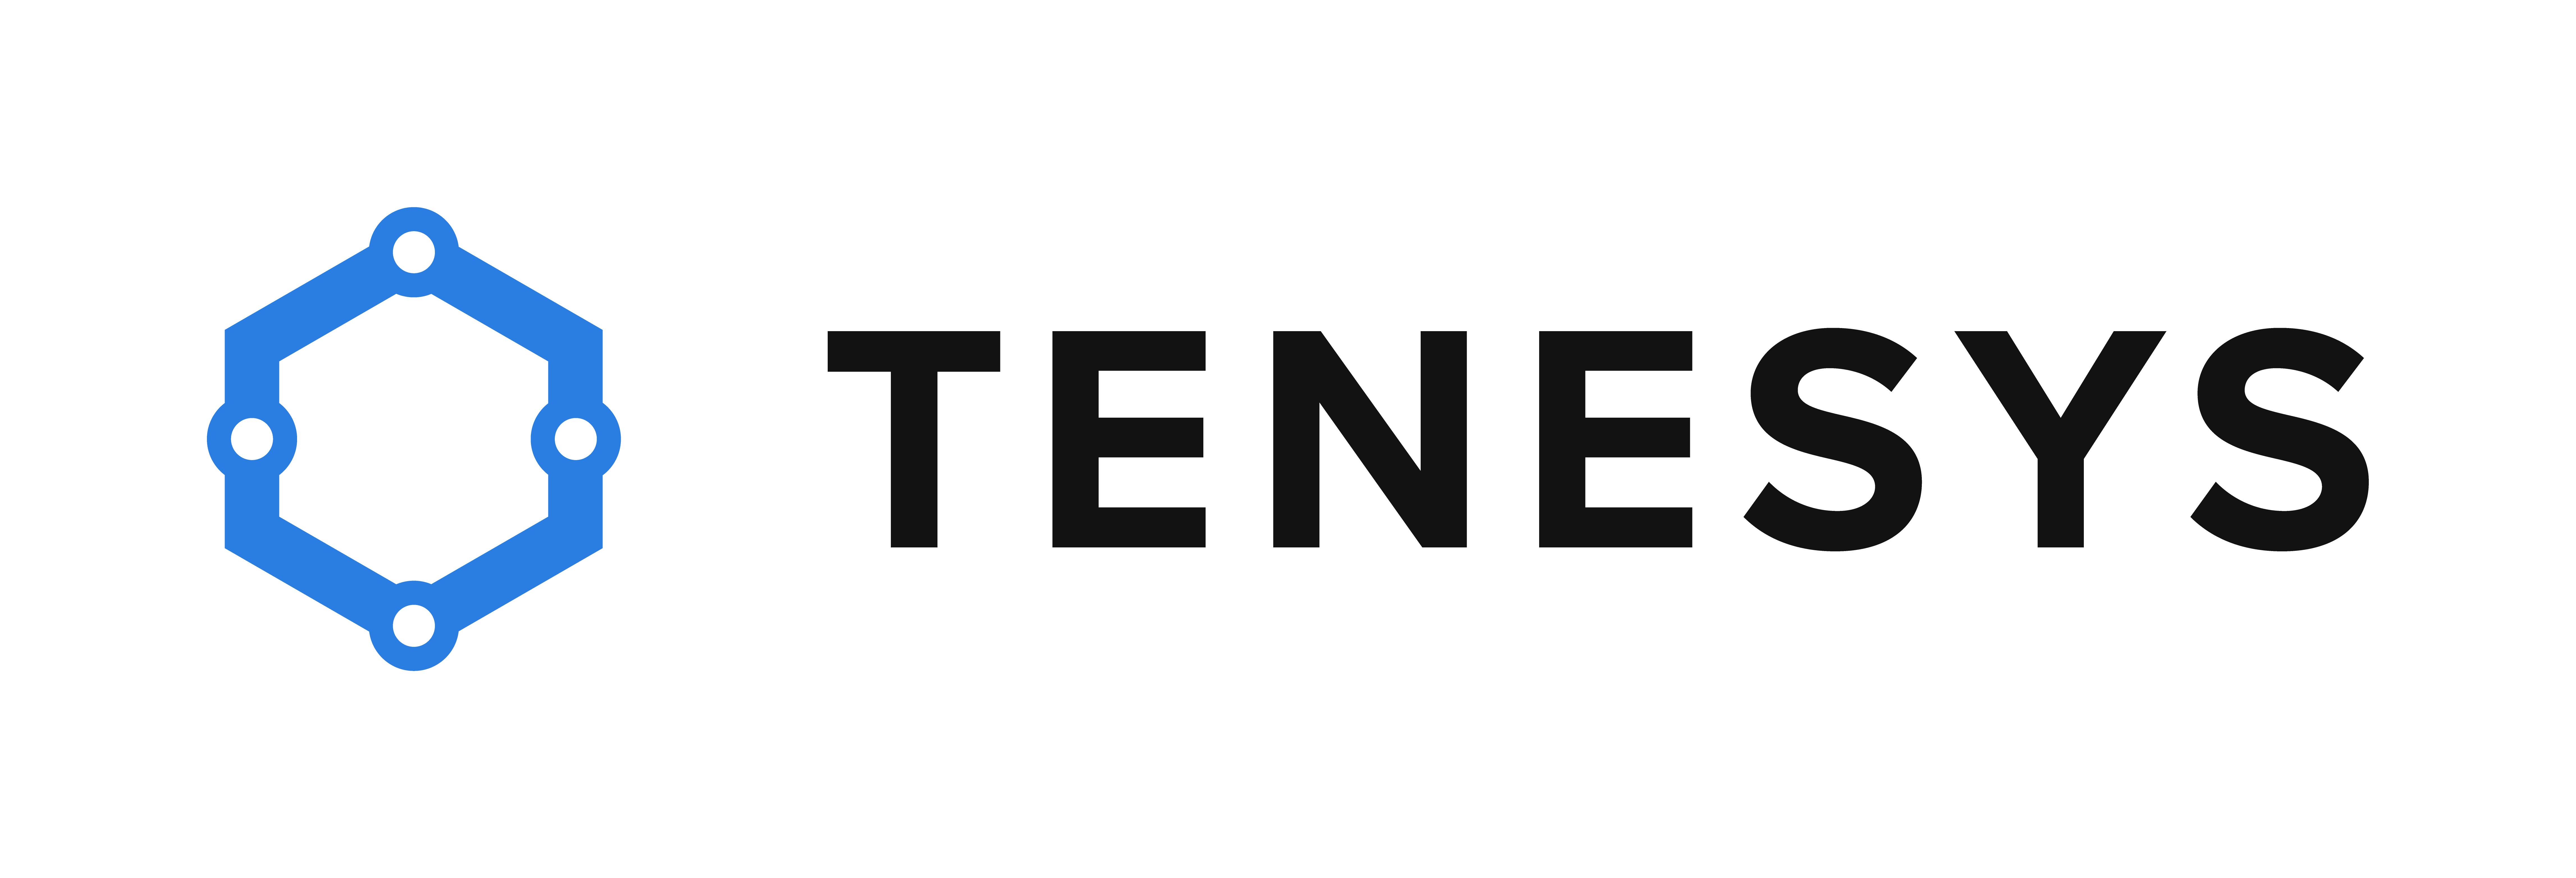 Tenesys logo